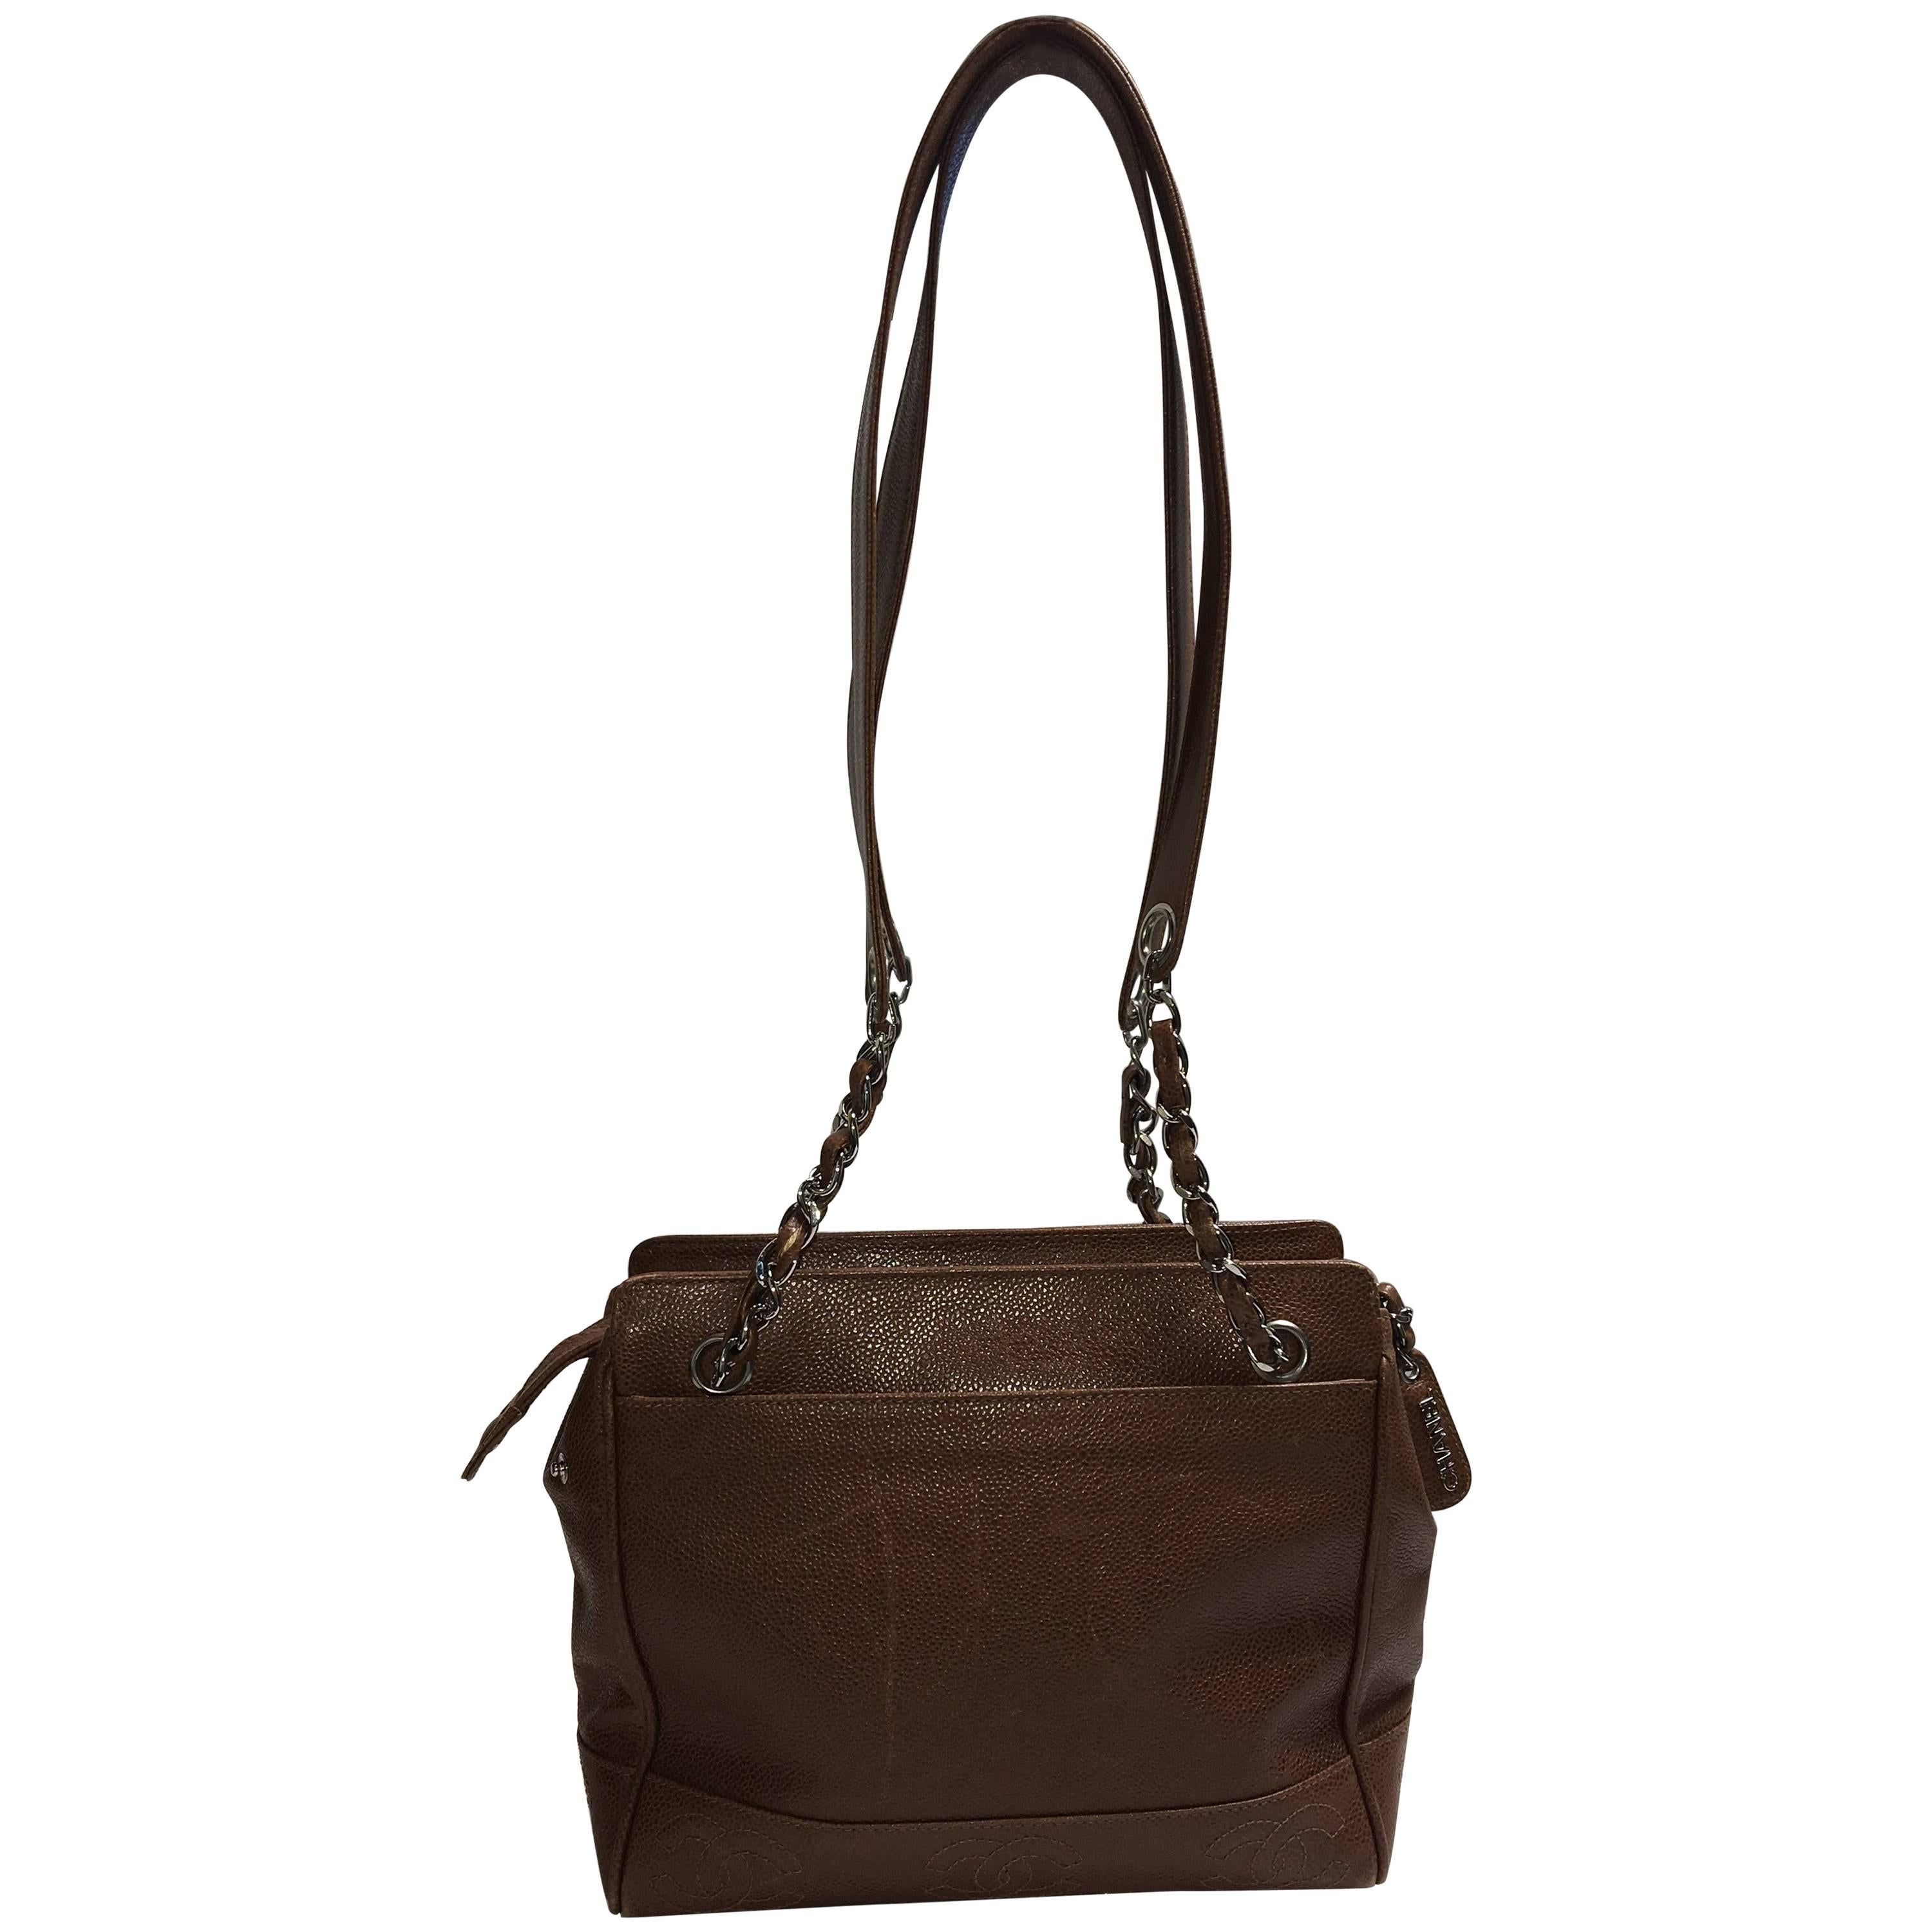 Chanel Vintage Pebbled Leather Handbag